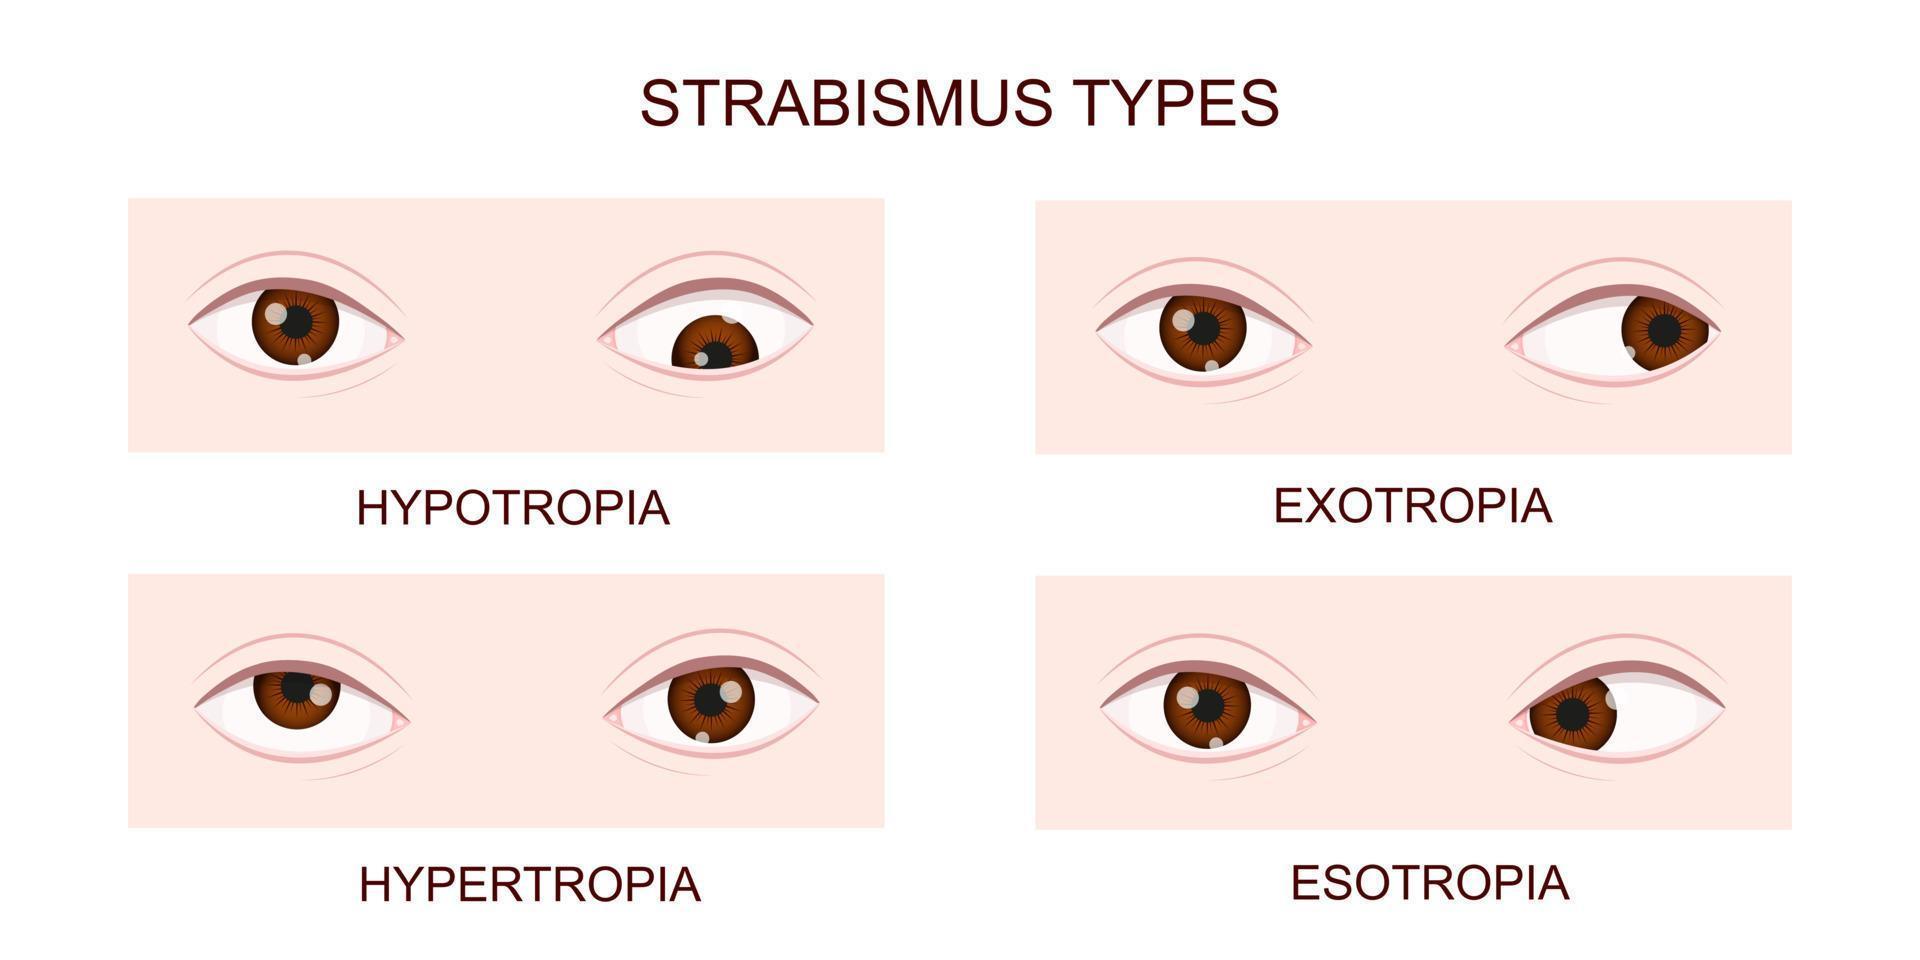 strabismus-types-hypotropia-hypertropia-exotropia-esotropia-human-eyes-with-different-squint-disorders-crossed-eyes-condition-vector.jpg